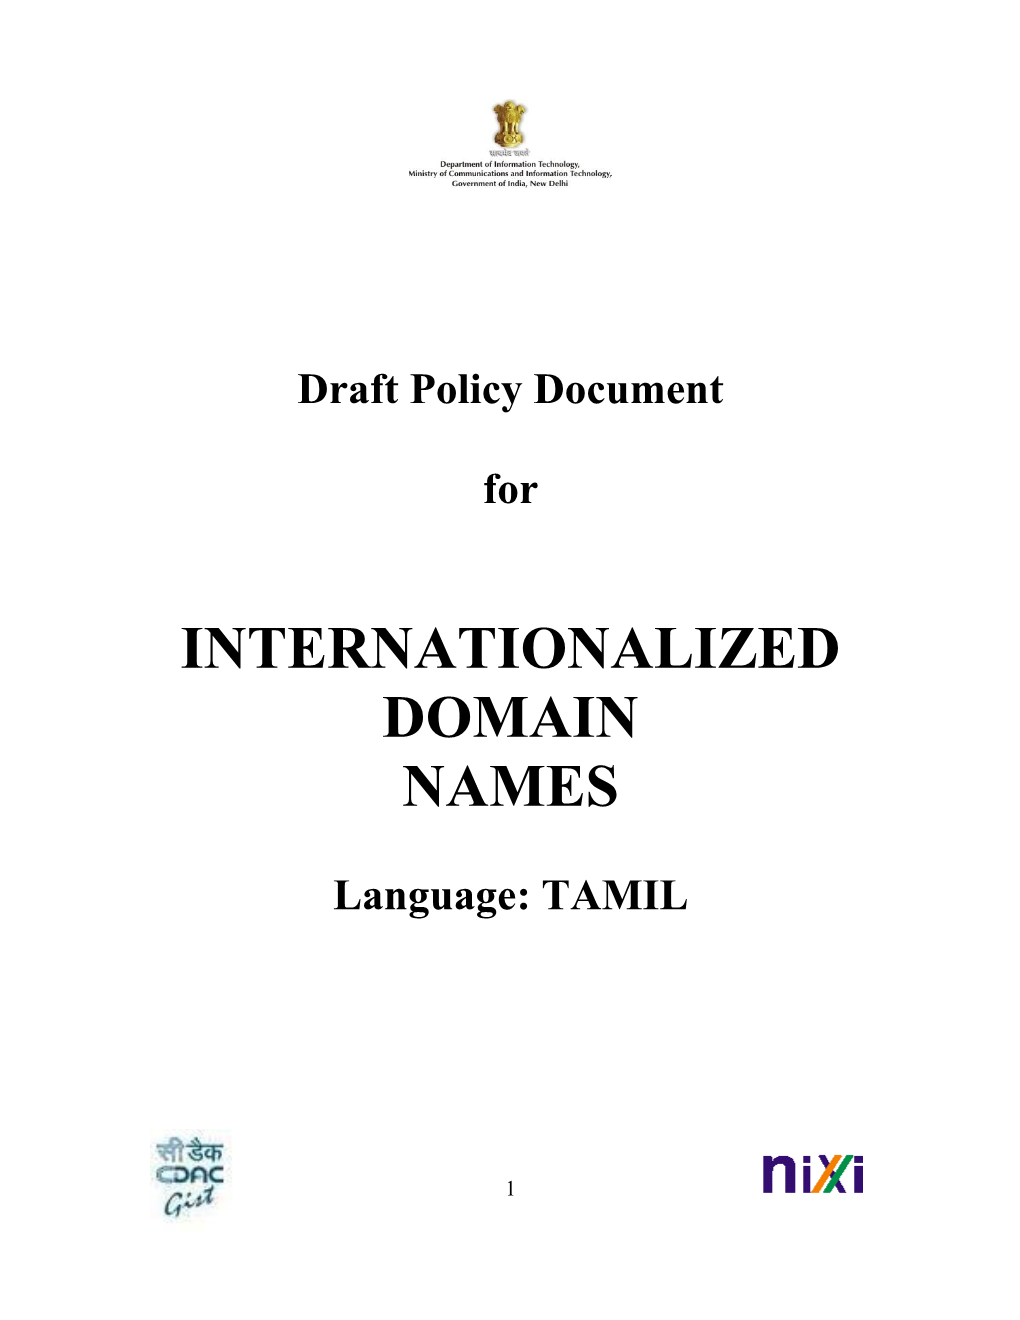 Internationalized Domain Names-Tamil